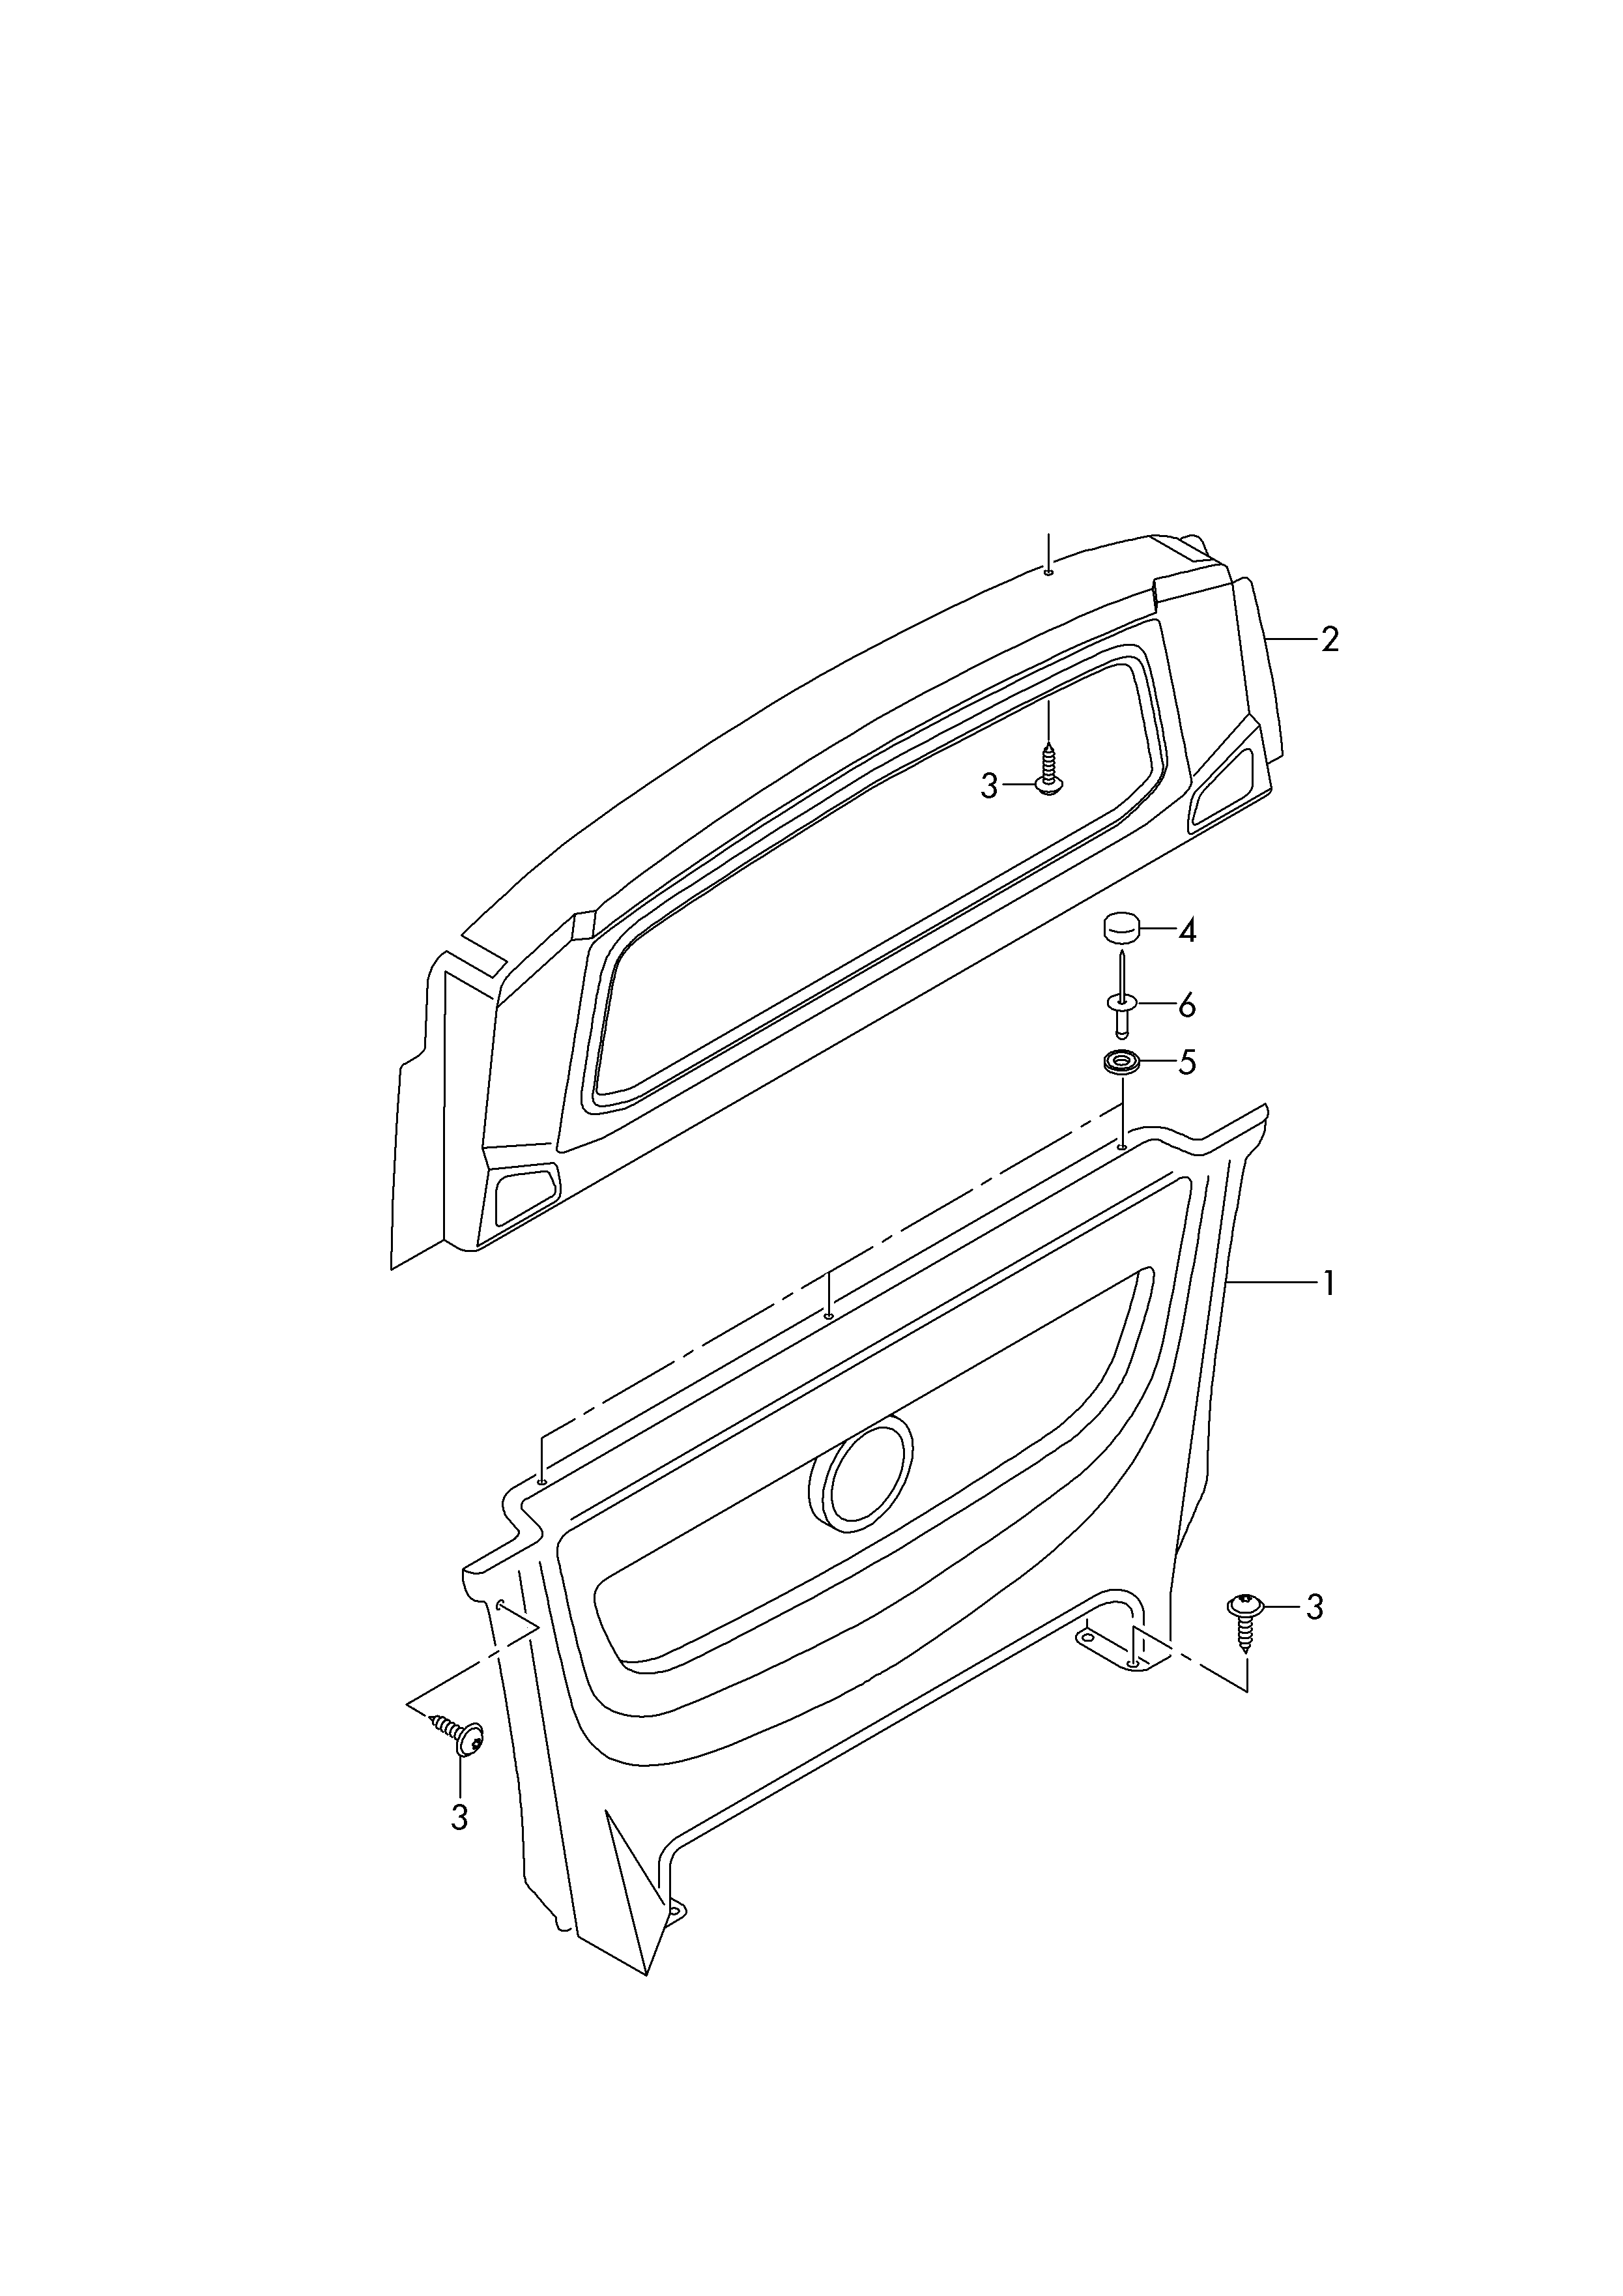 panel separacion  - Transporter - tr